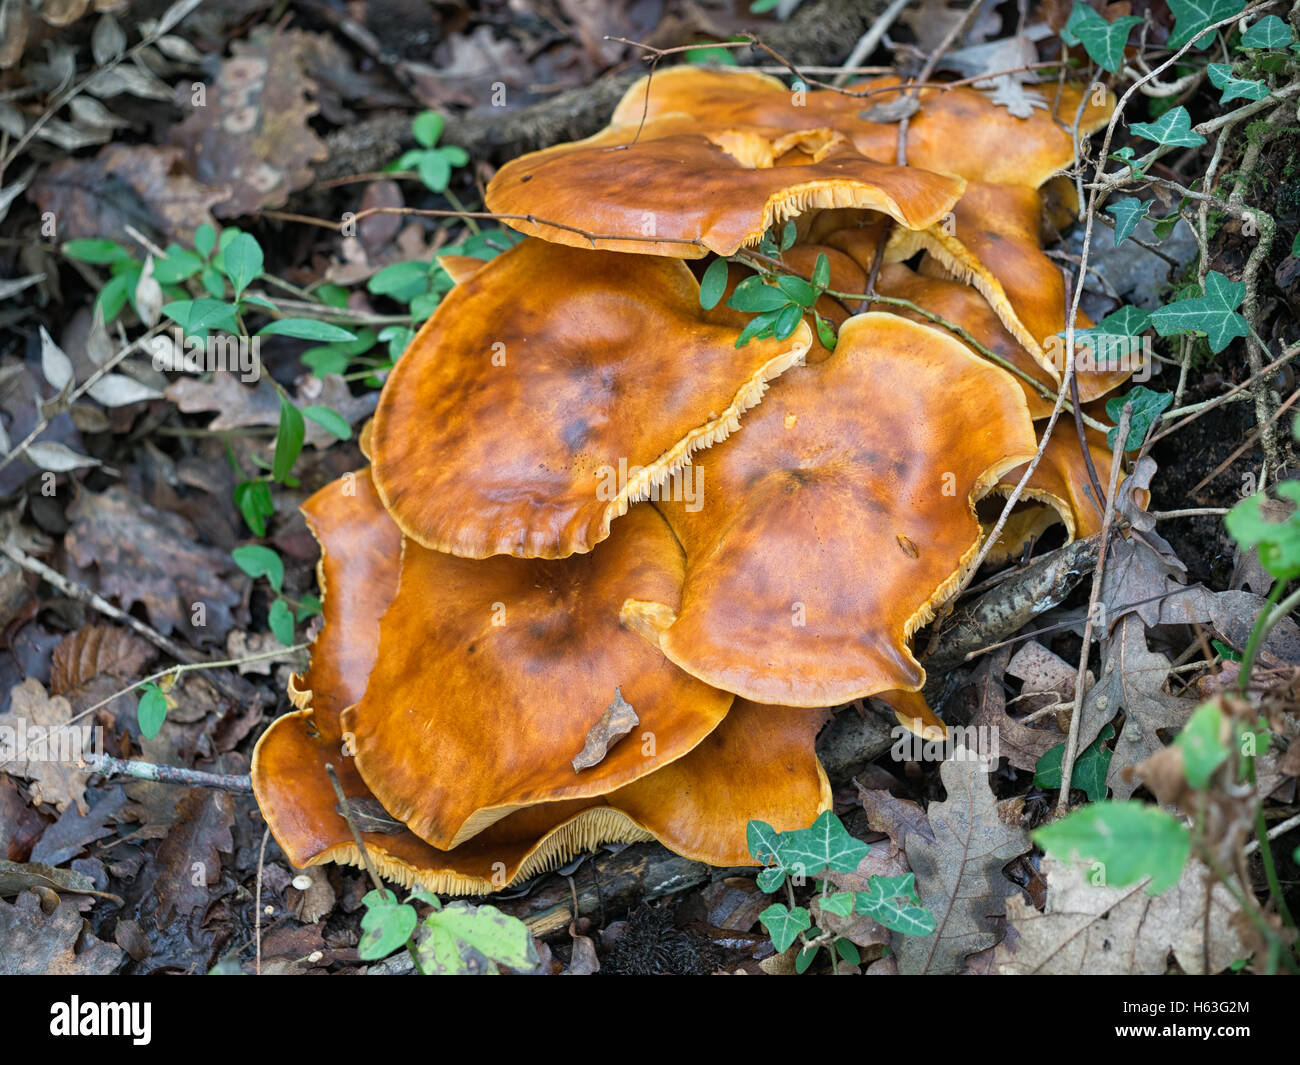 Omphalotus olearius. Orange toxiques champignons. Bioluminescents. Banque D'Images